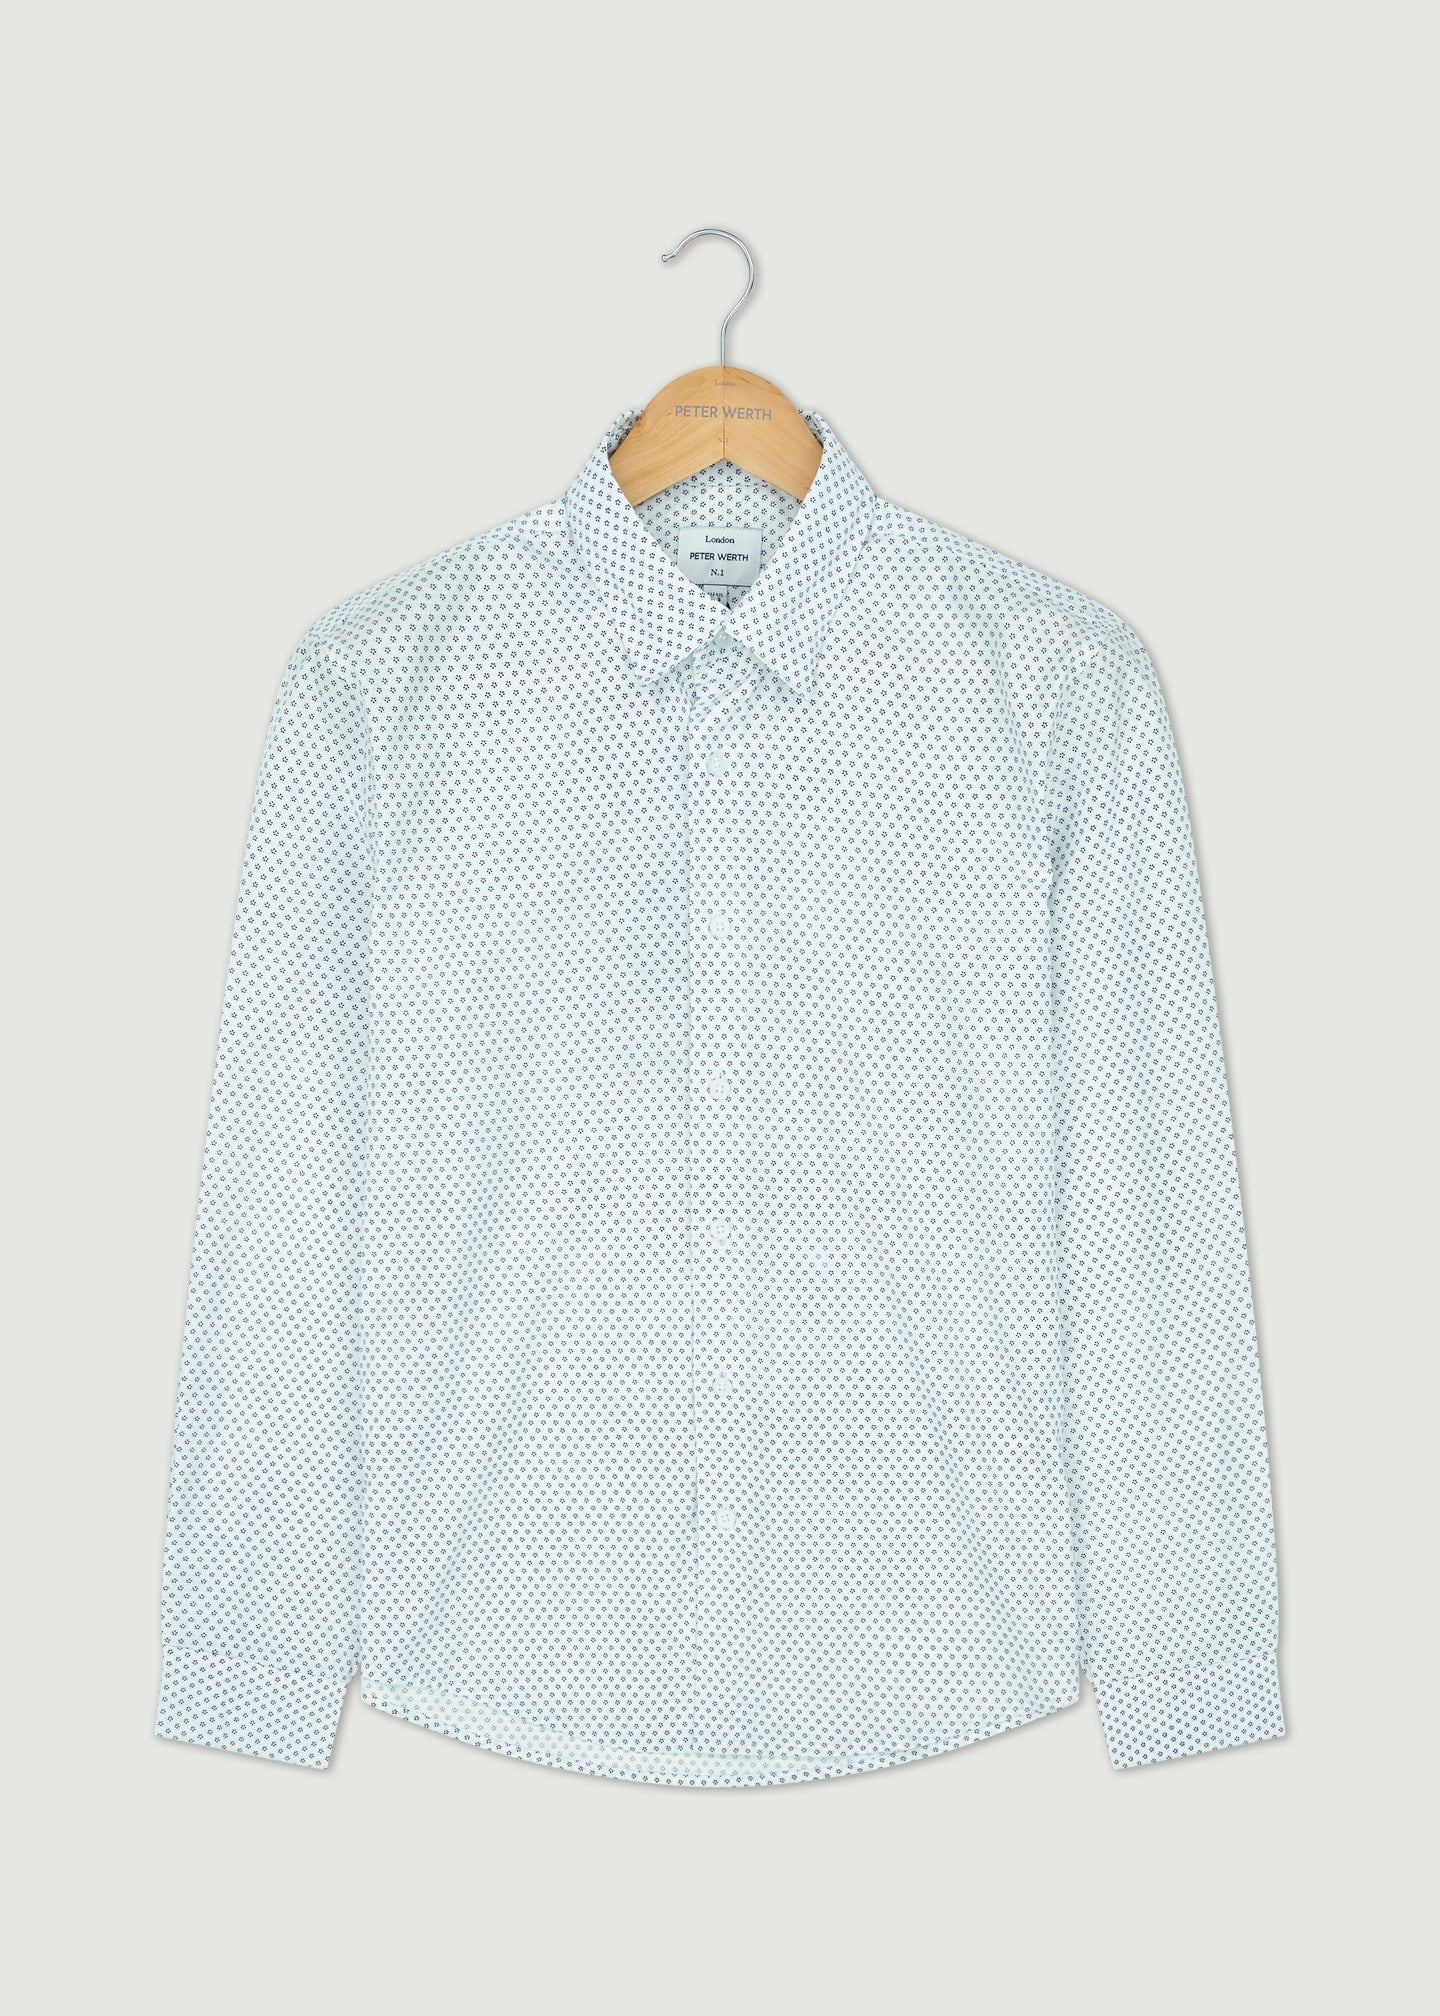 Hanley Long Sleeve Shirt - White/Navy